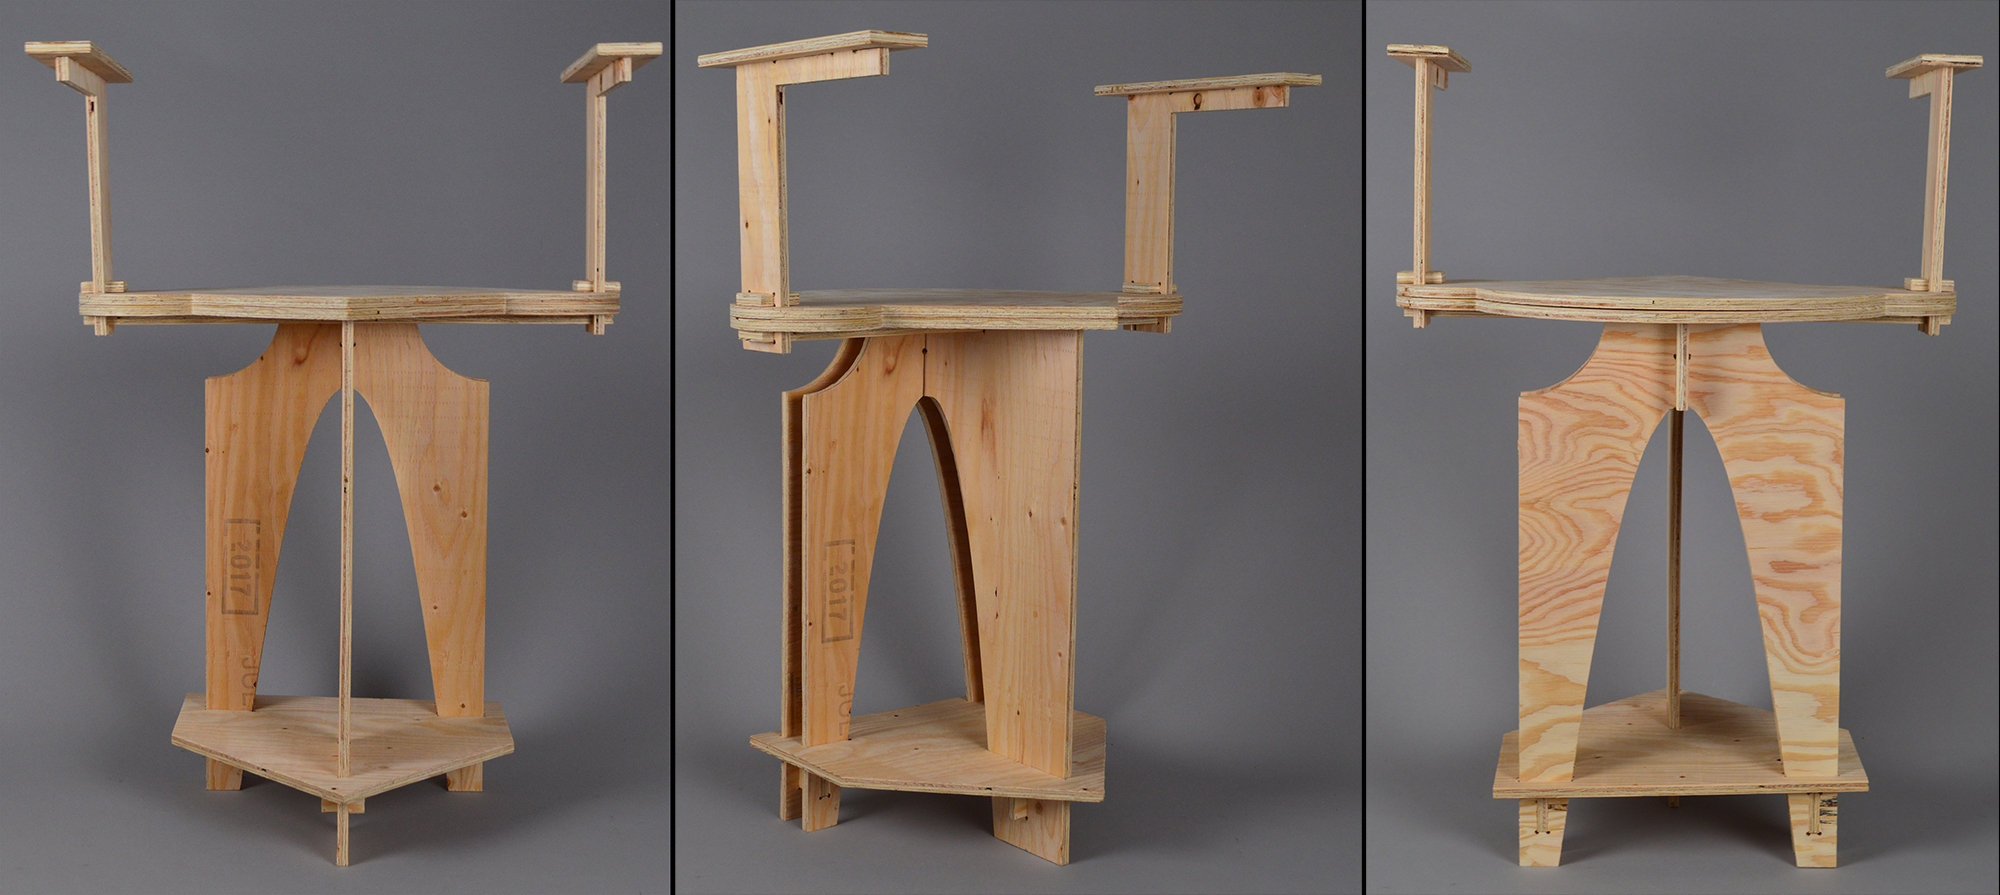 Andrew Crocker "Untitled Chair"